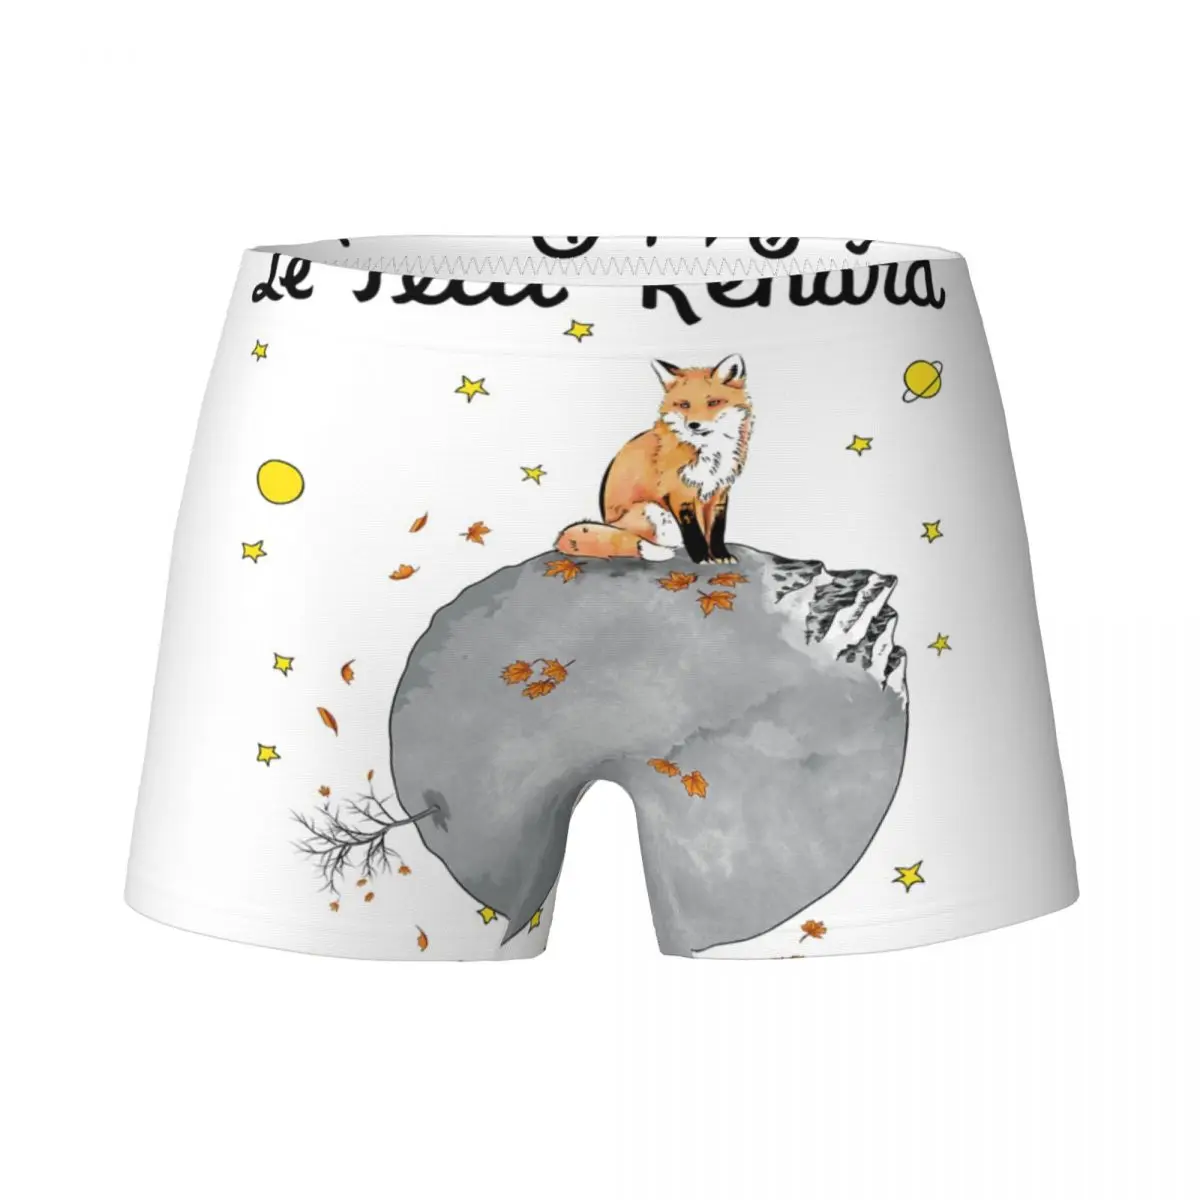 

Children's Girls' Underwear Kids Boxers Shorts Soft Cotton Teenagers Panties The Little Prince Le Petit Underpants 4-15Y